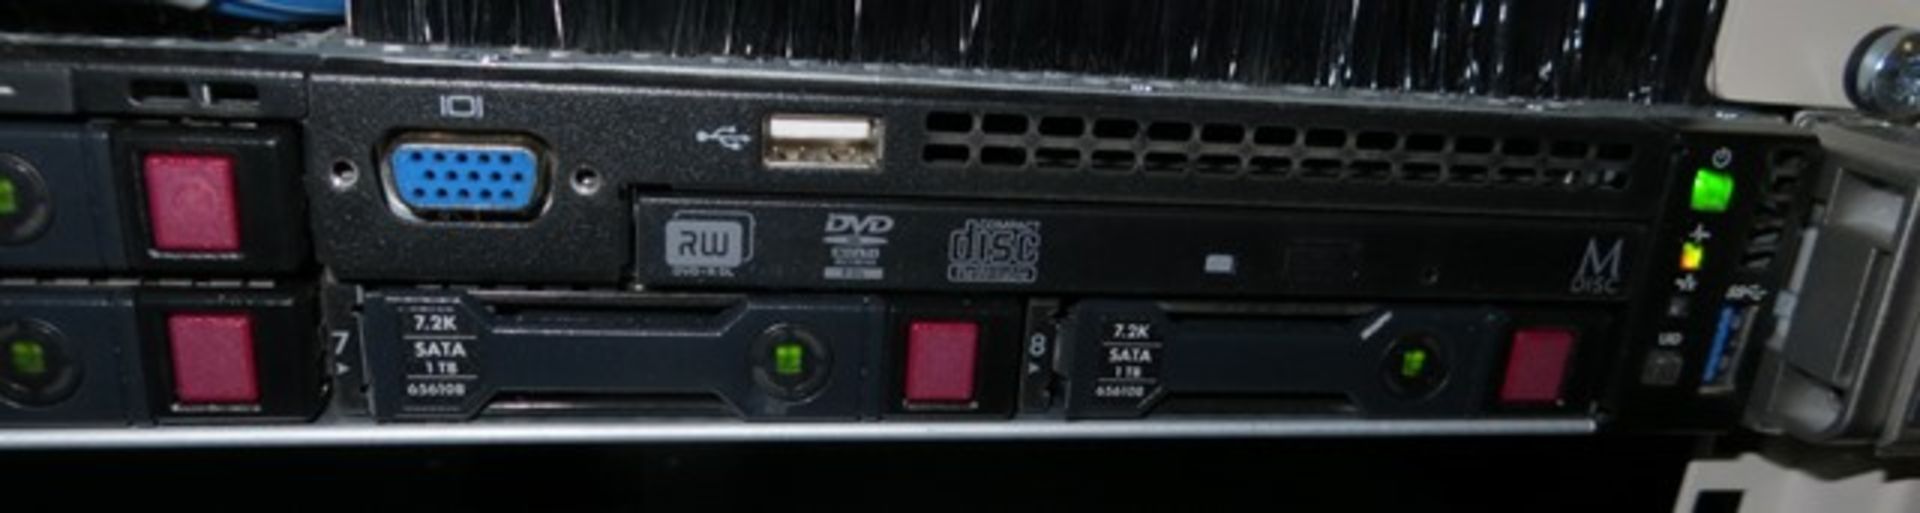 HP Proliant DL360 Gen 9 server model czj62008hf s/n 755258-b21 with six 1Tb hard drives and 2 x